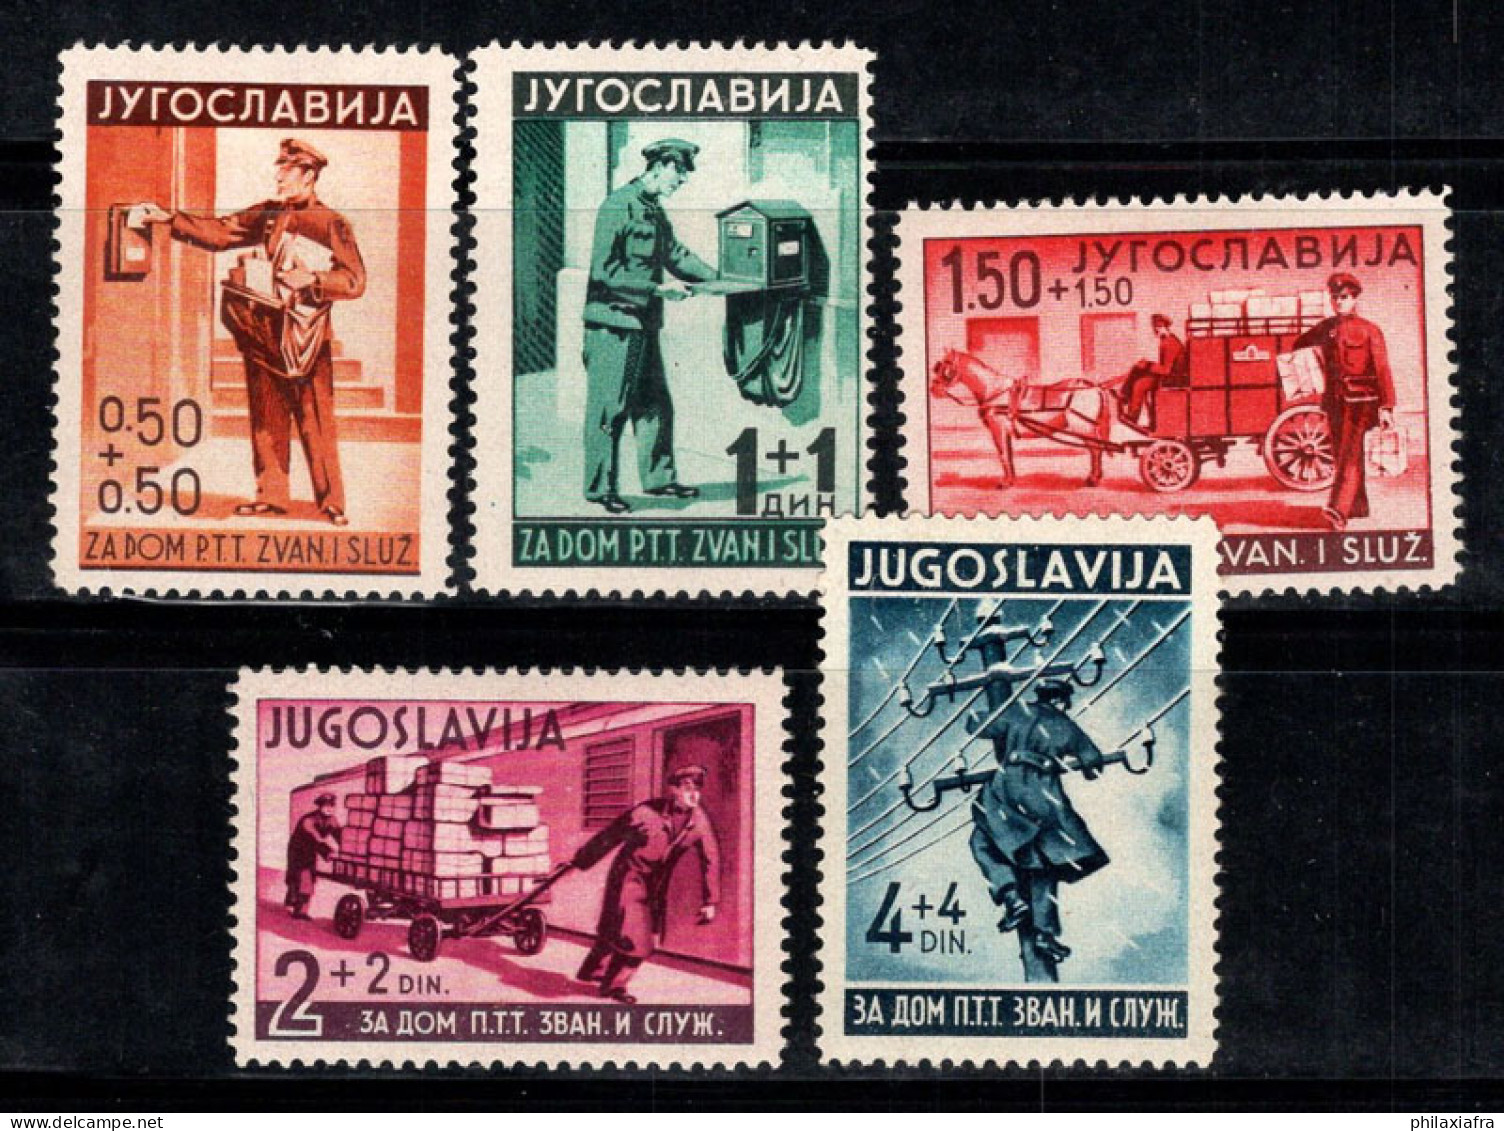 Yougoslavie 1940 Mi. 408-412 Neuf * MH 100% COURRIER, Facteur, Télégraphe - Unused Stamps